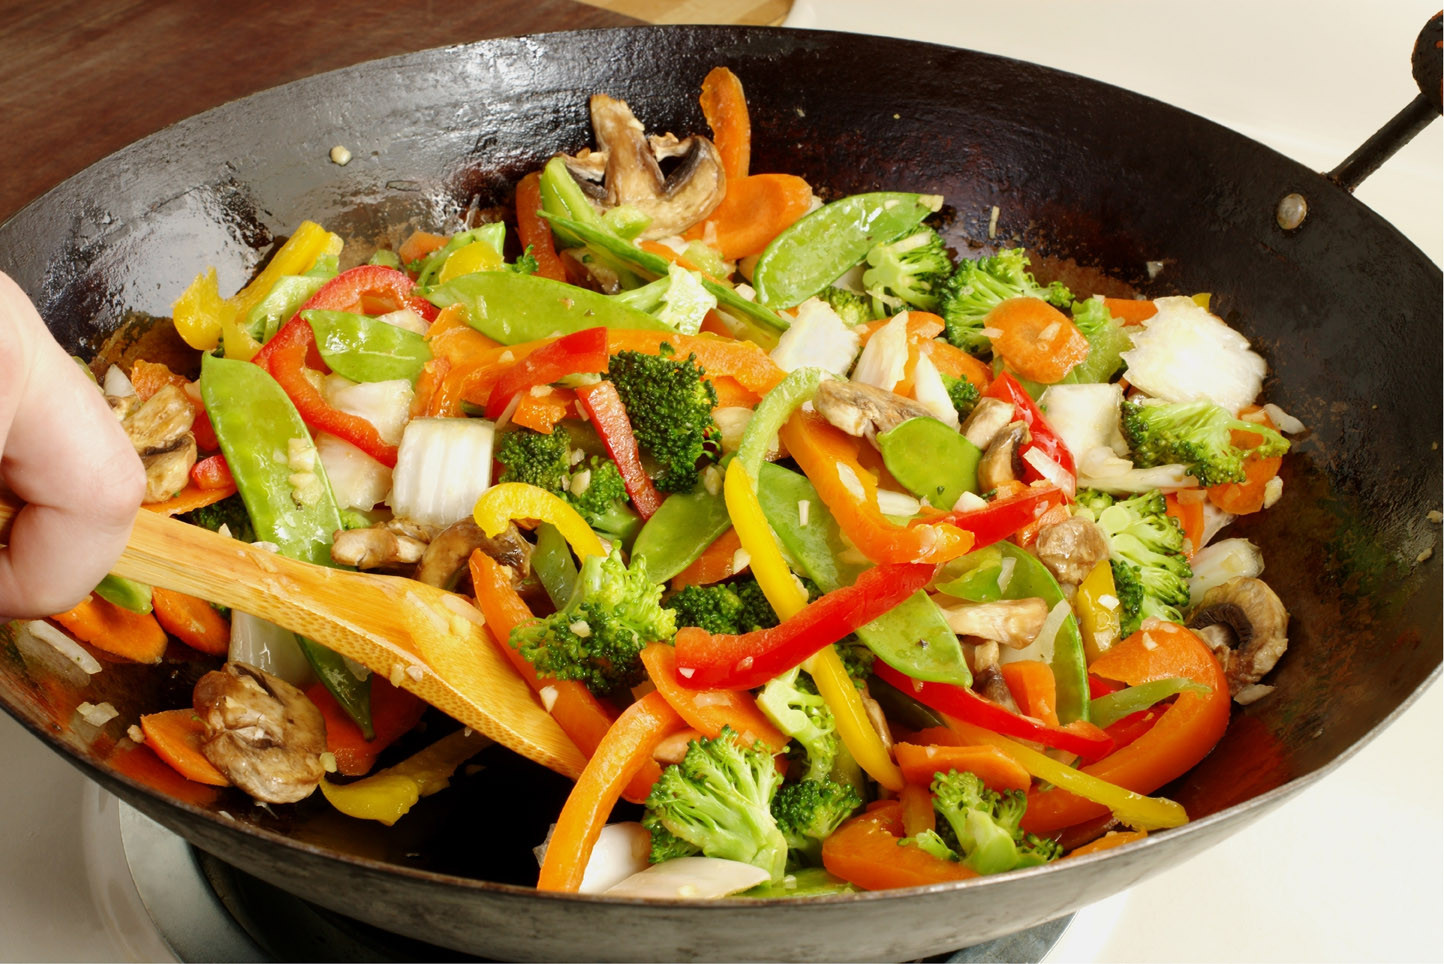 Asian Vegetable Stir Fry Recipes
 PORK AND FRESH VEGETABLE STIR FRY